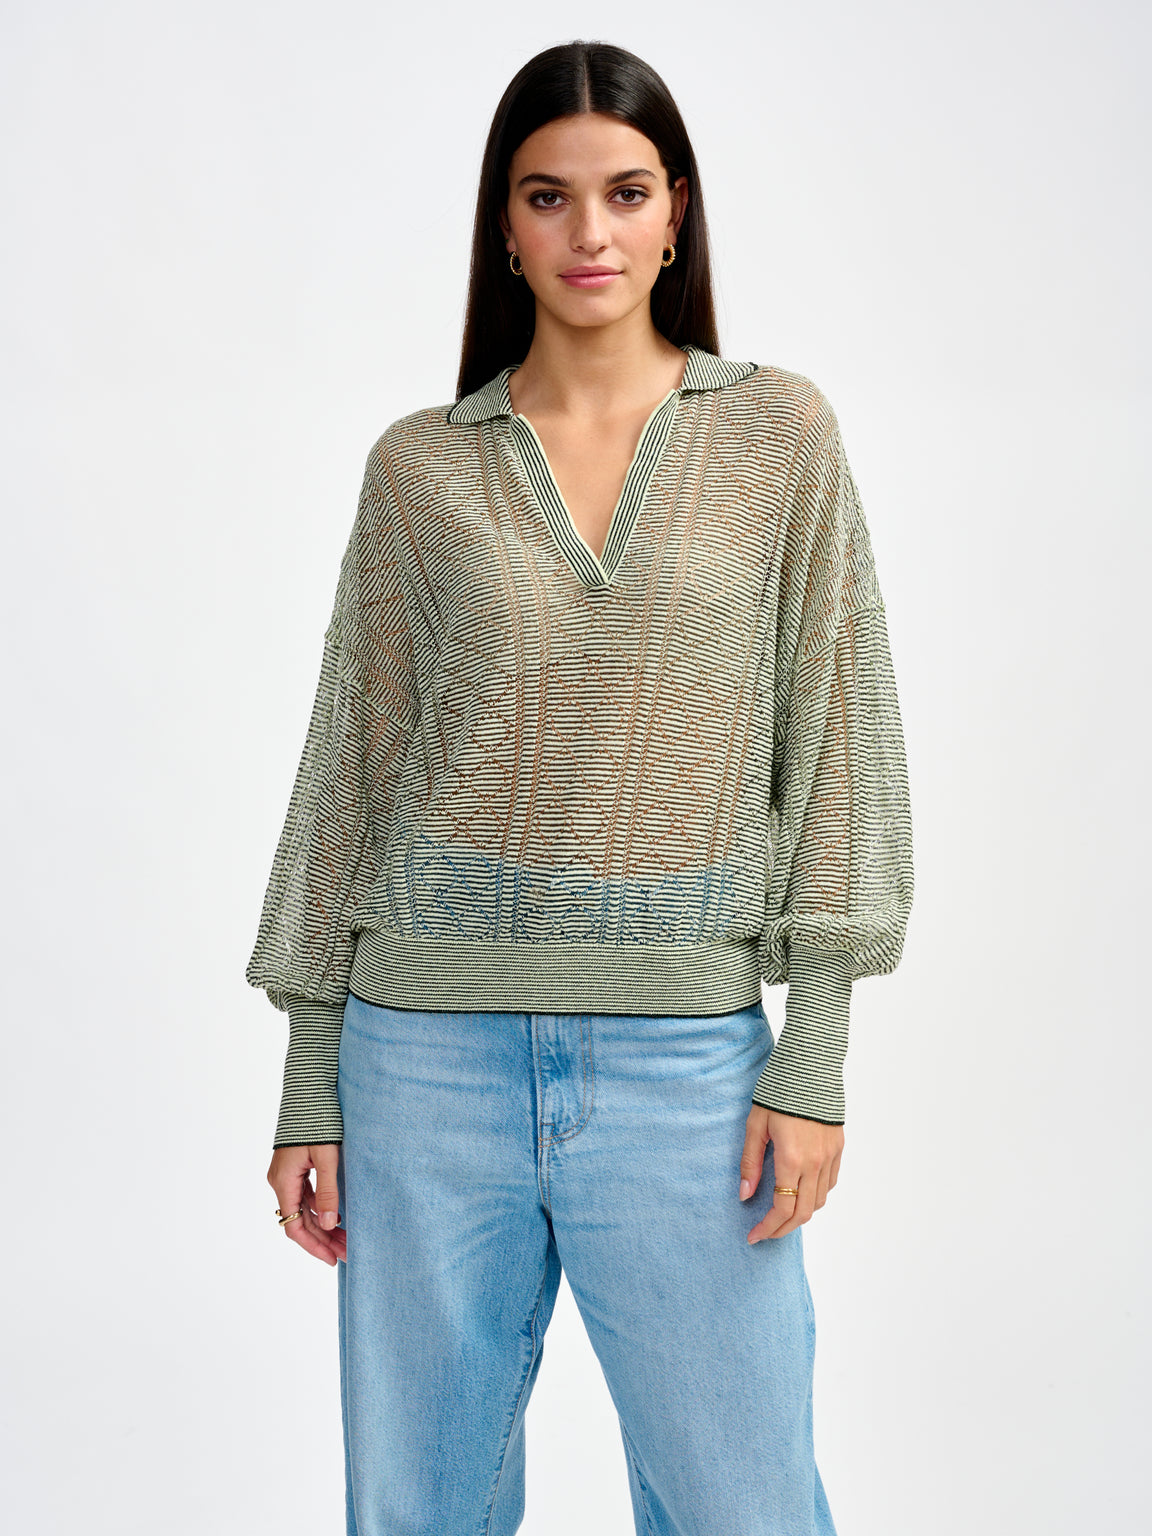 Dommi Sweater - Green | Women Collection | Bellerose